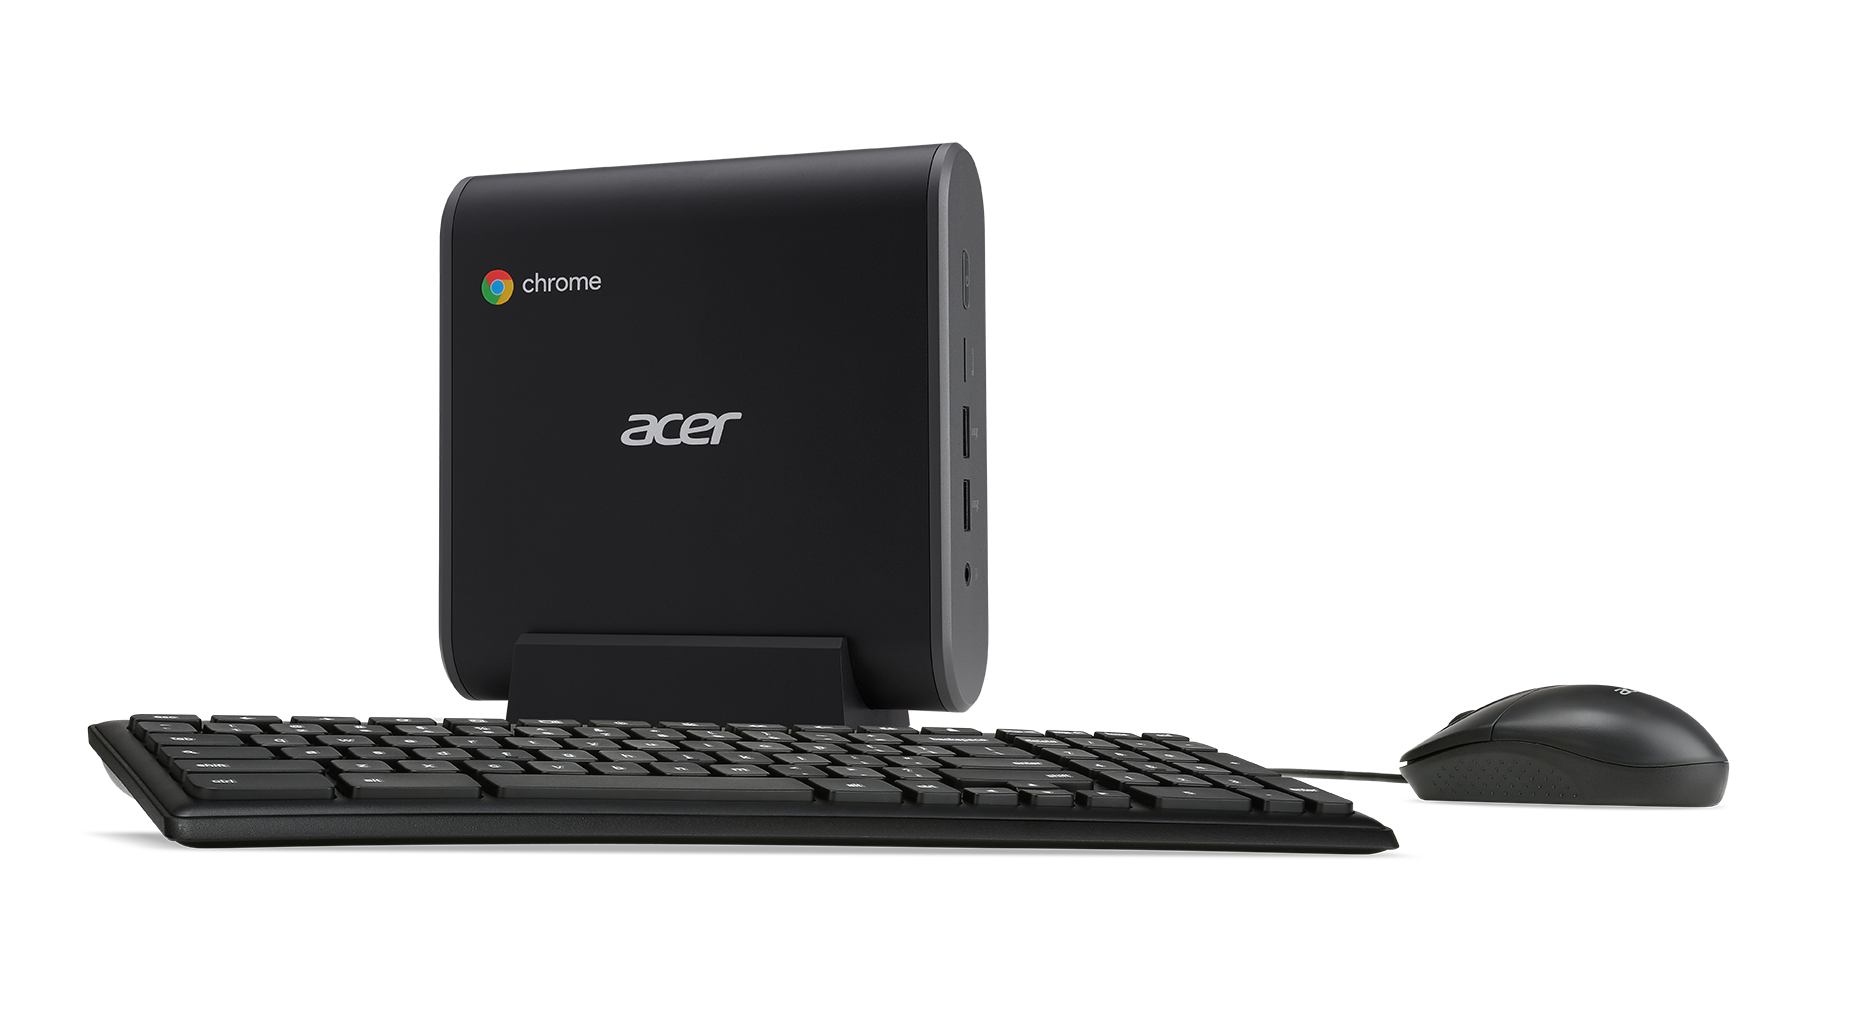 Acer Chromebox, Intel Celeron 3867U Processor, 4GB DDR4, 32GB SSD, Chrome, CXI3-4GKM4 for $149